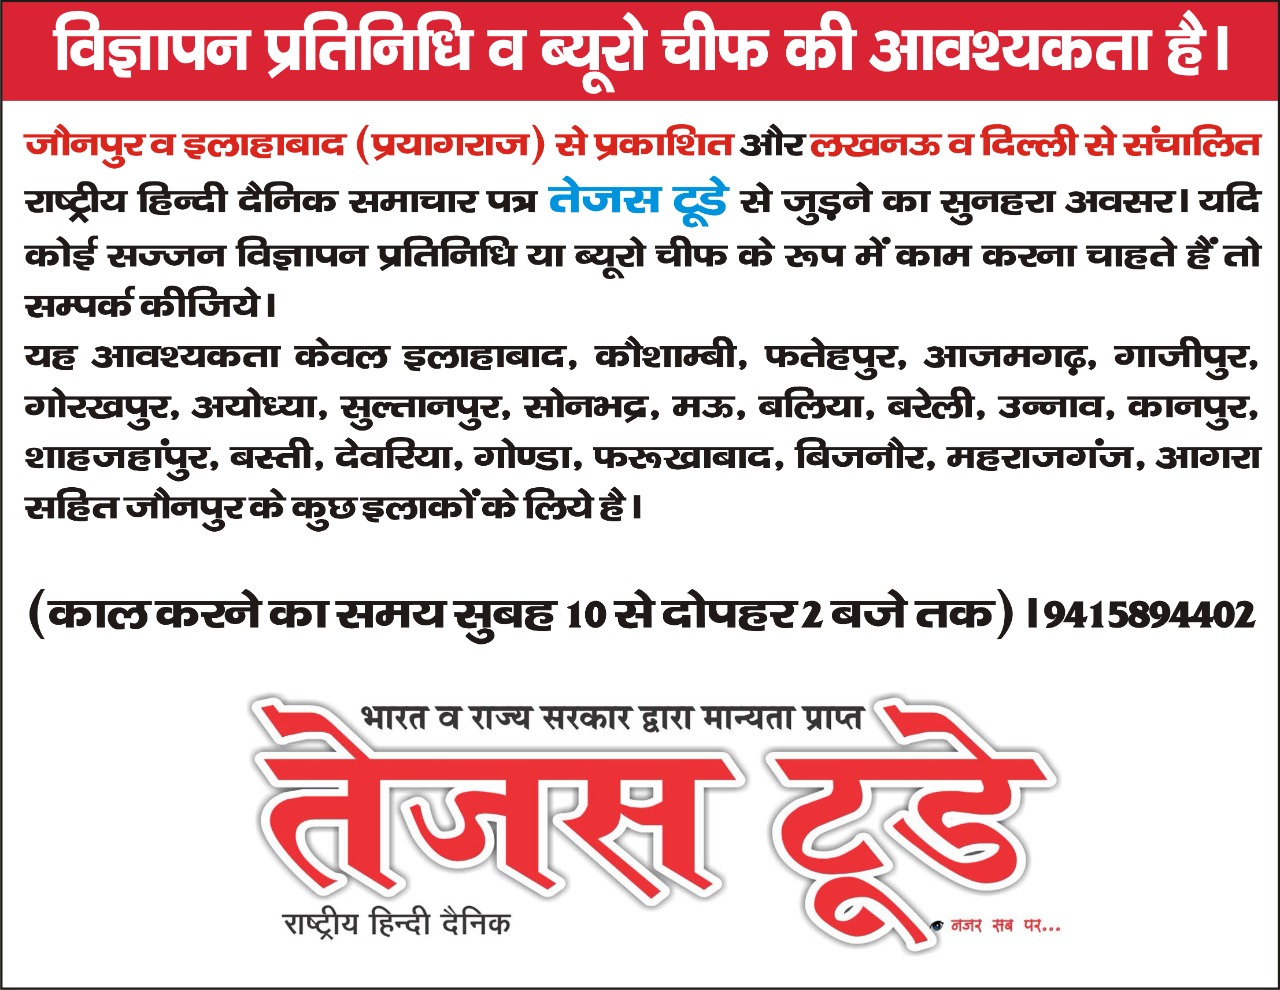 Jaunpur News: Three-day Ram Katha and Yagya completed